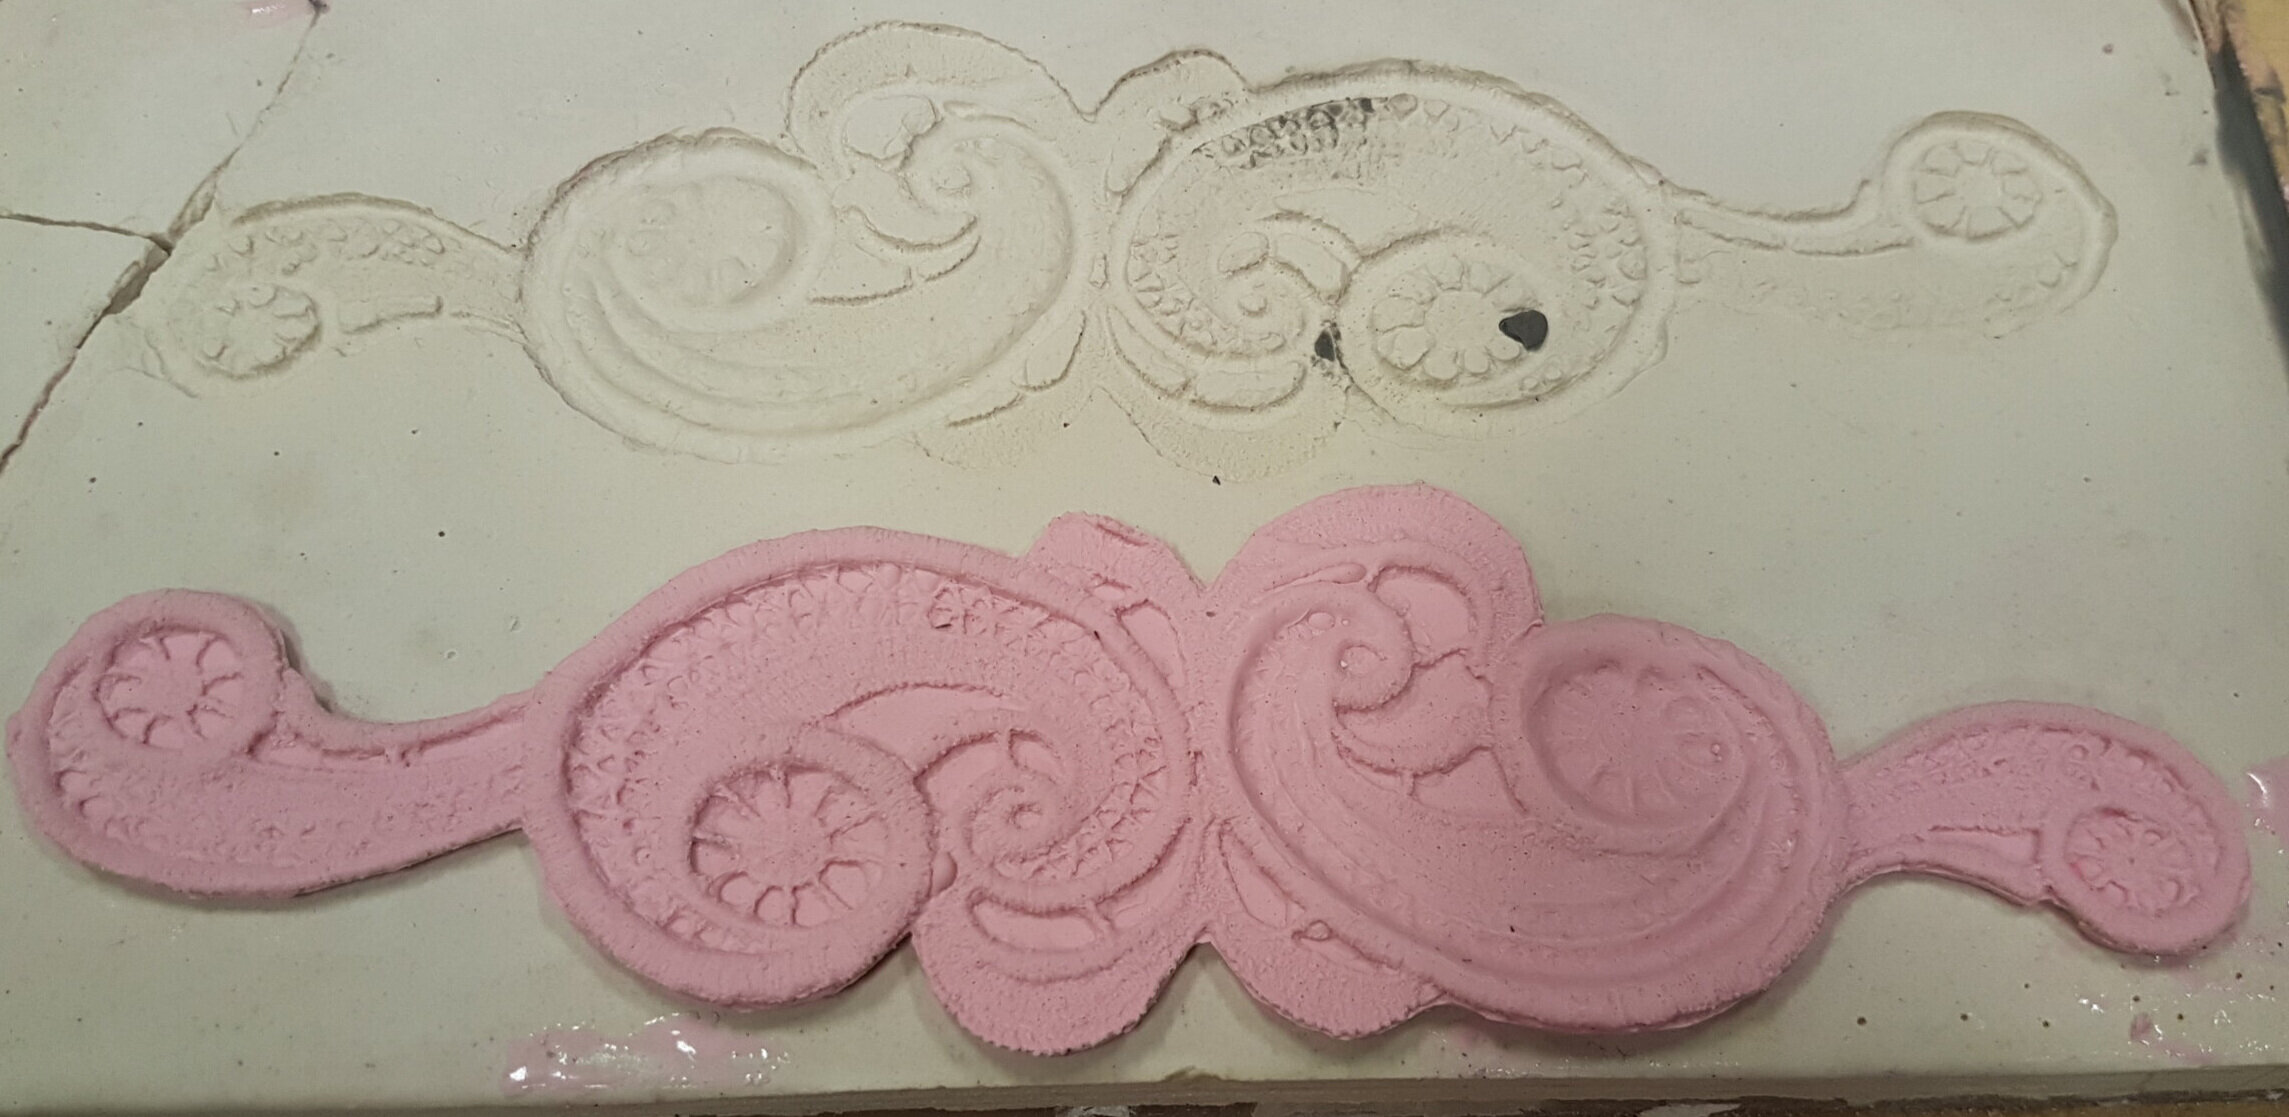  Lace cast in rubber silicone. 